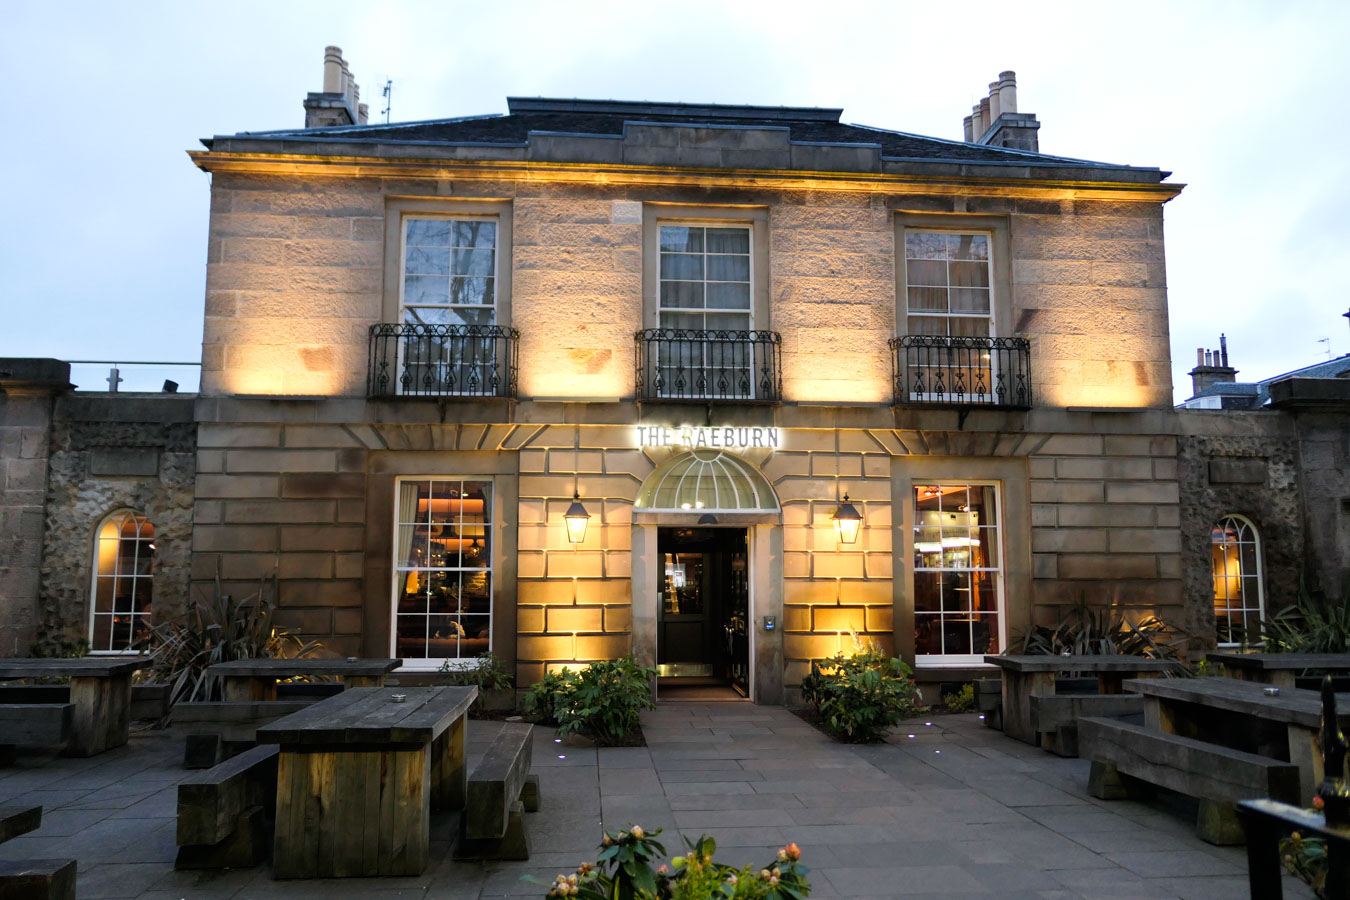 Best Stockbridge Edinburgh Restaurants Travel Guide - Raeburn - Where to Get a Drink